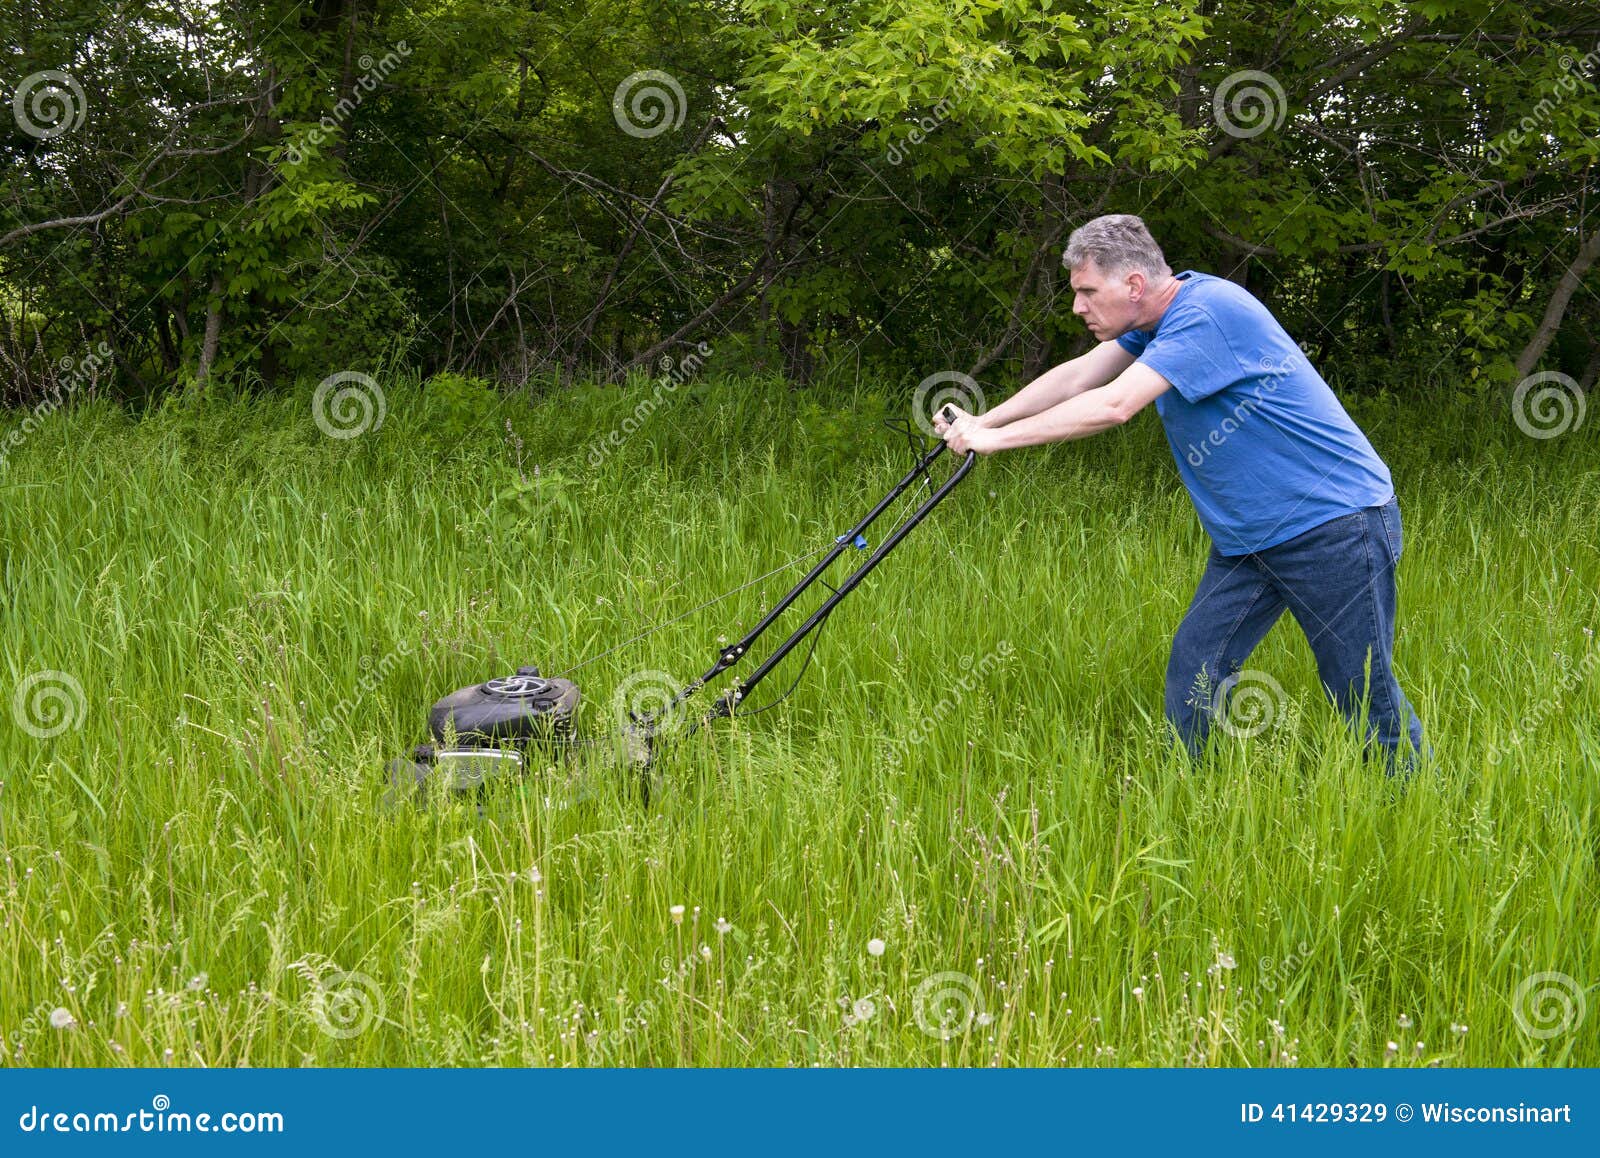 man-lawnmower-mowing-tall-grass-big-large-lawn-homeowner-mower-push-type-male-making-his-way-41429329.jpg